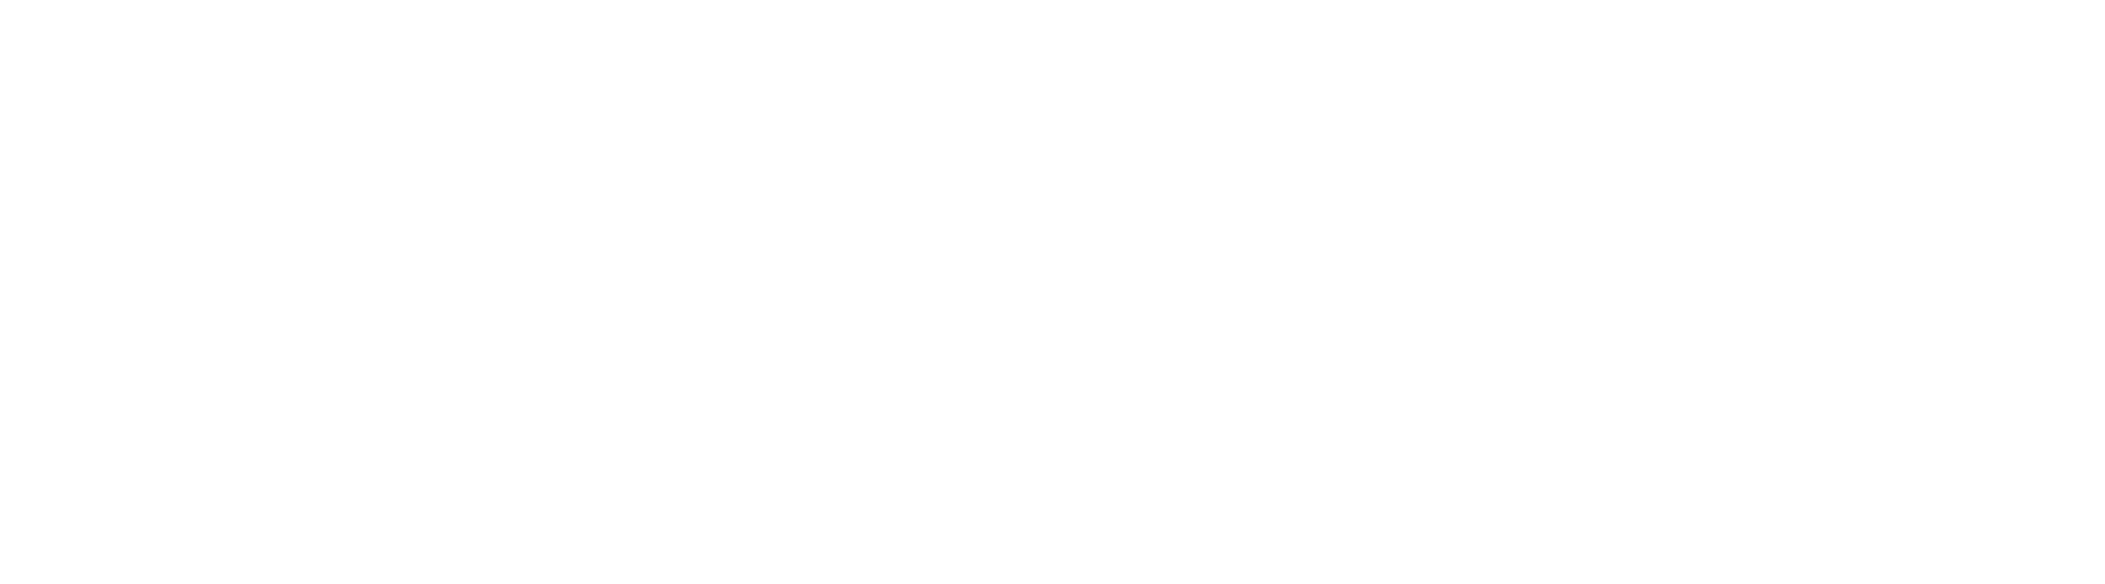 VyprVPN Support 帮助中心主页